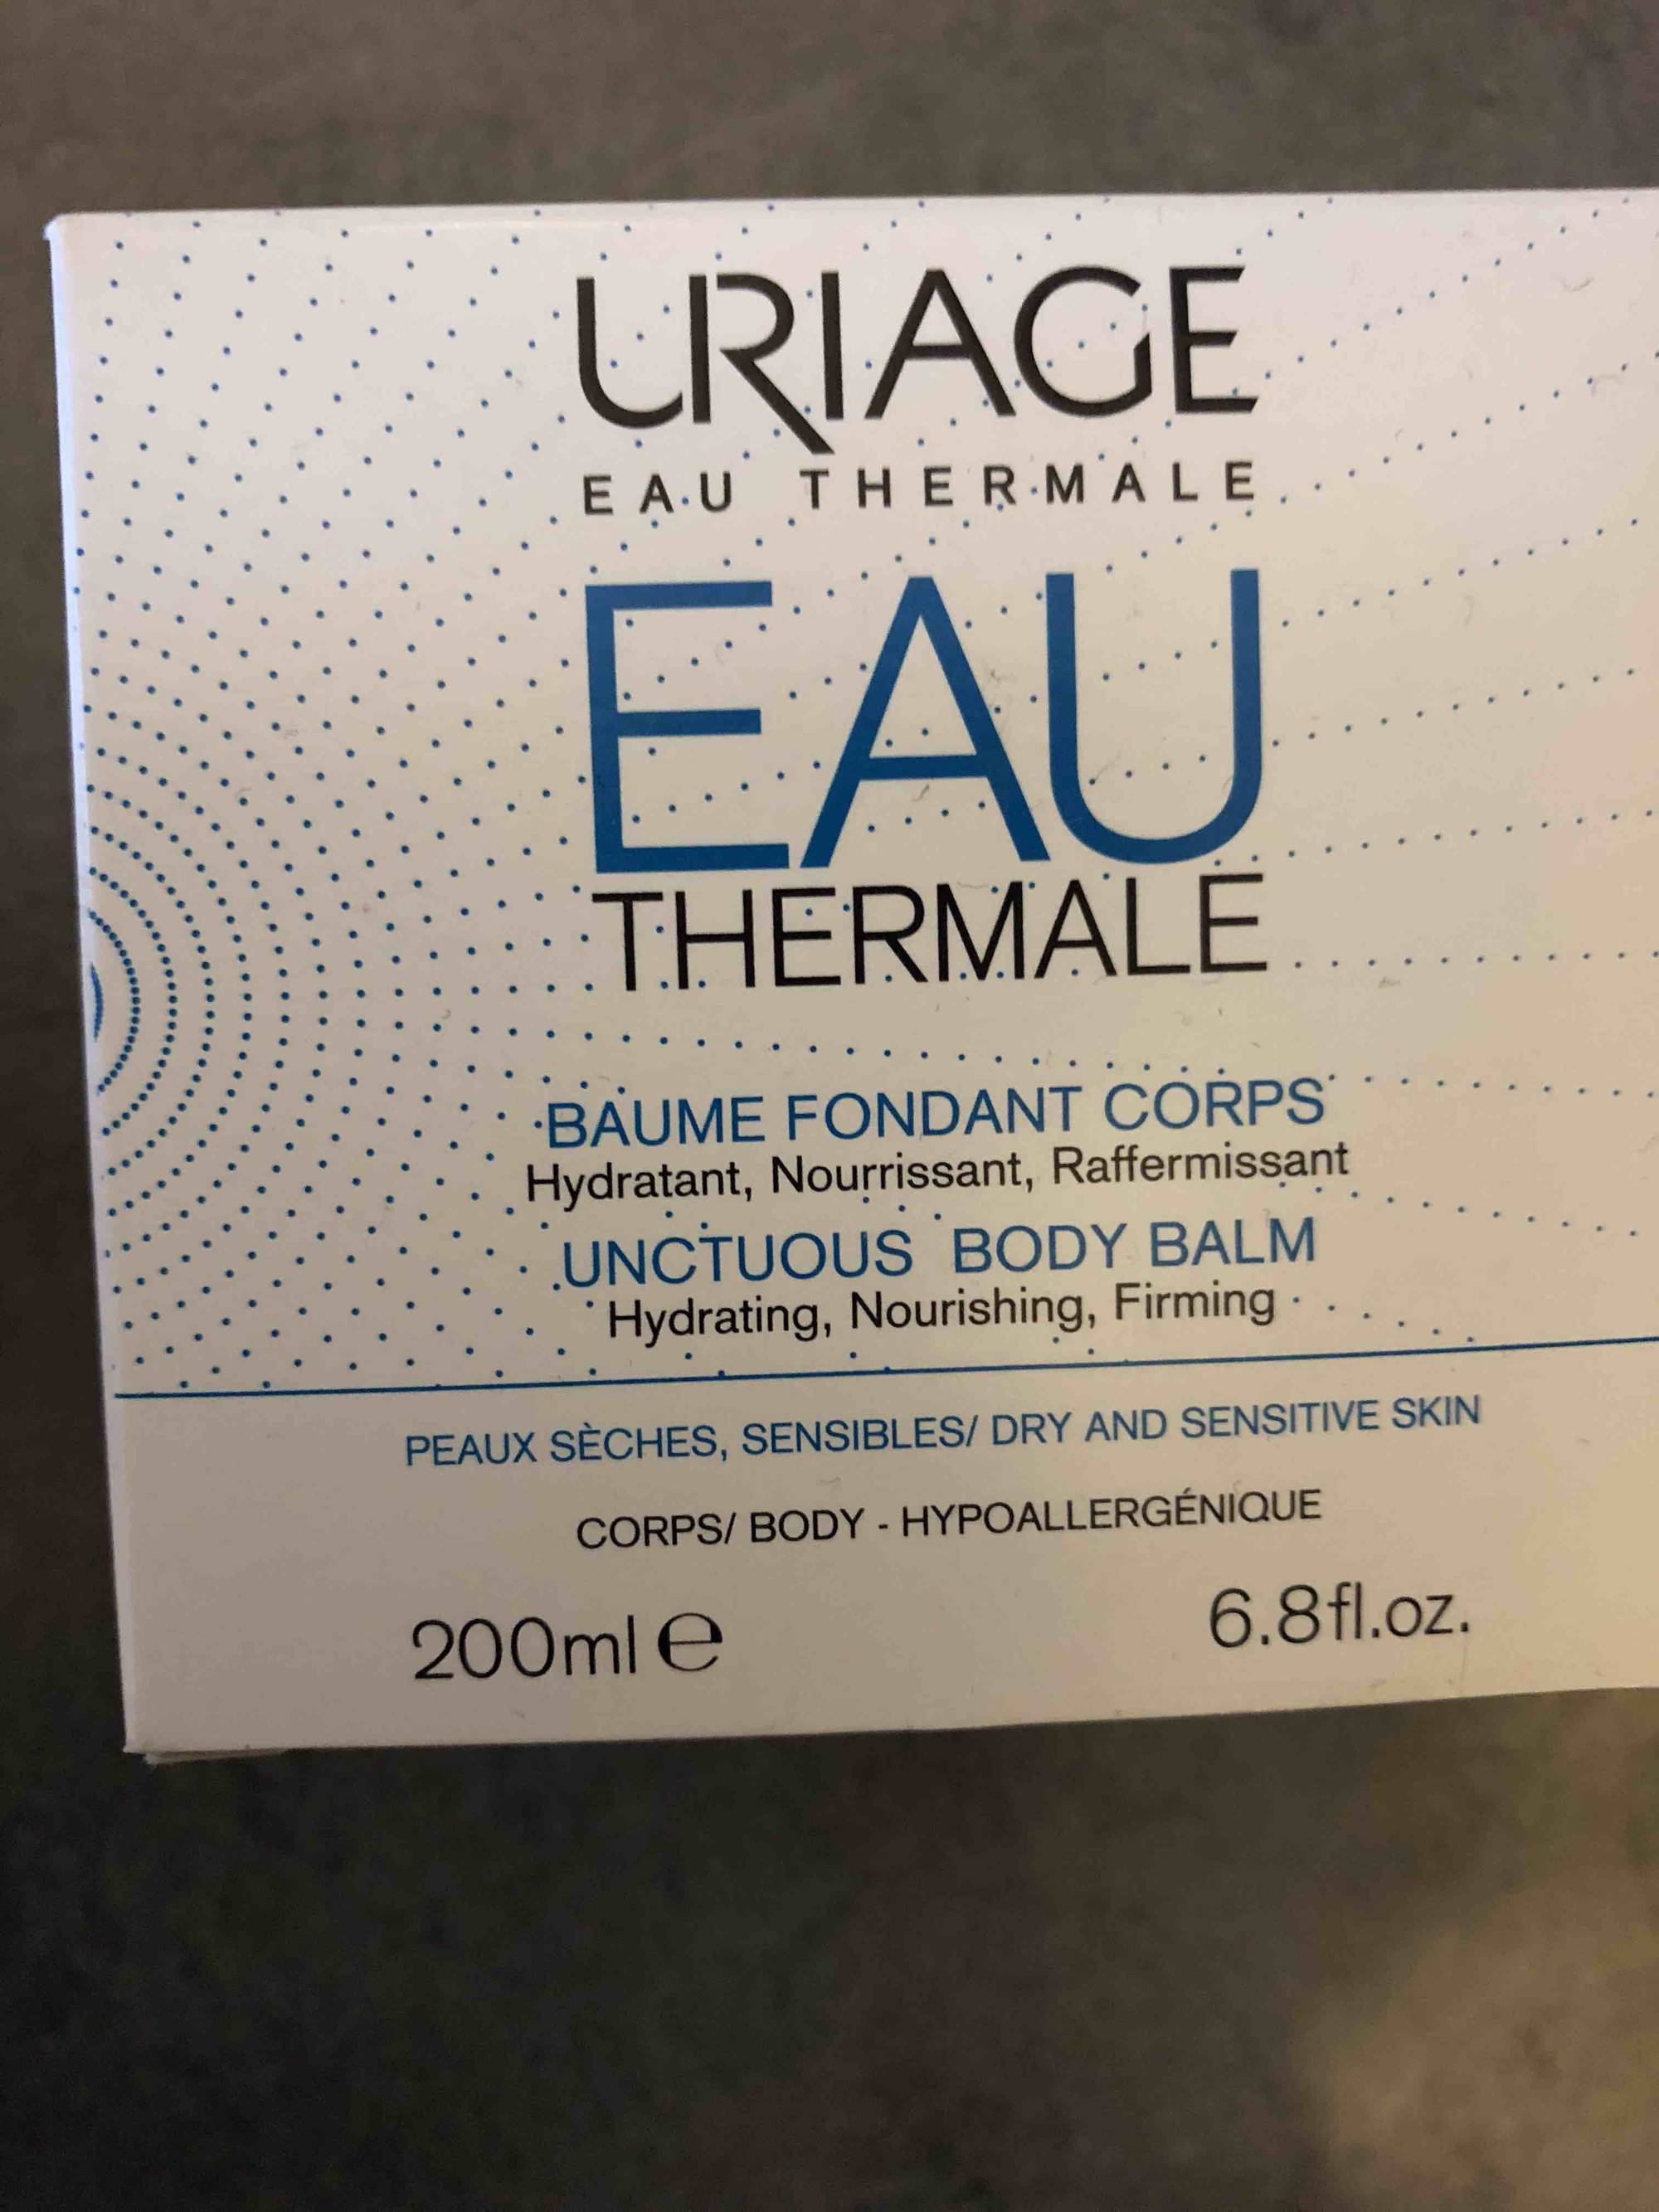 URIAGE - Eau thermale - Baume fondant corps